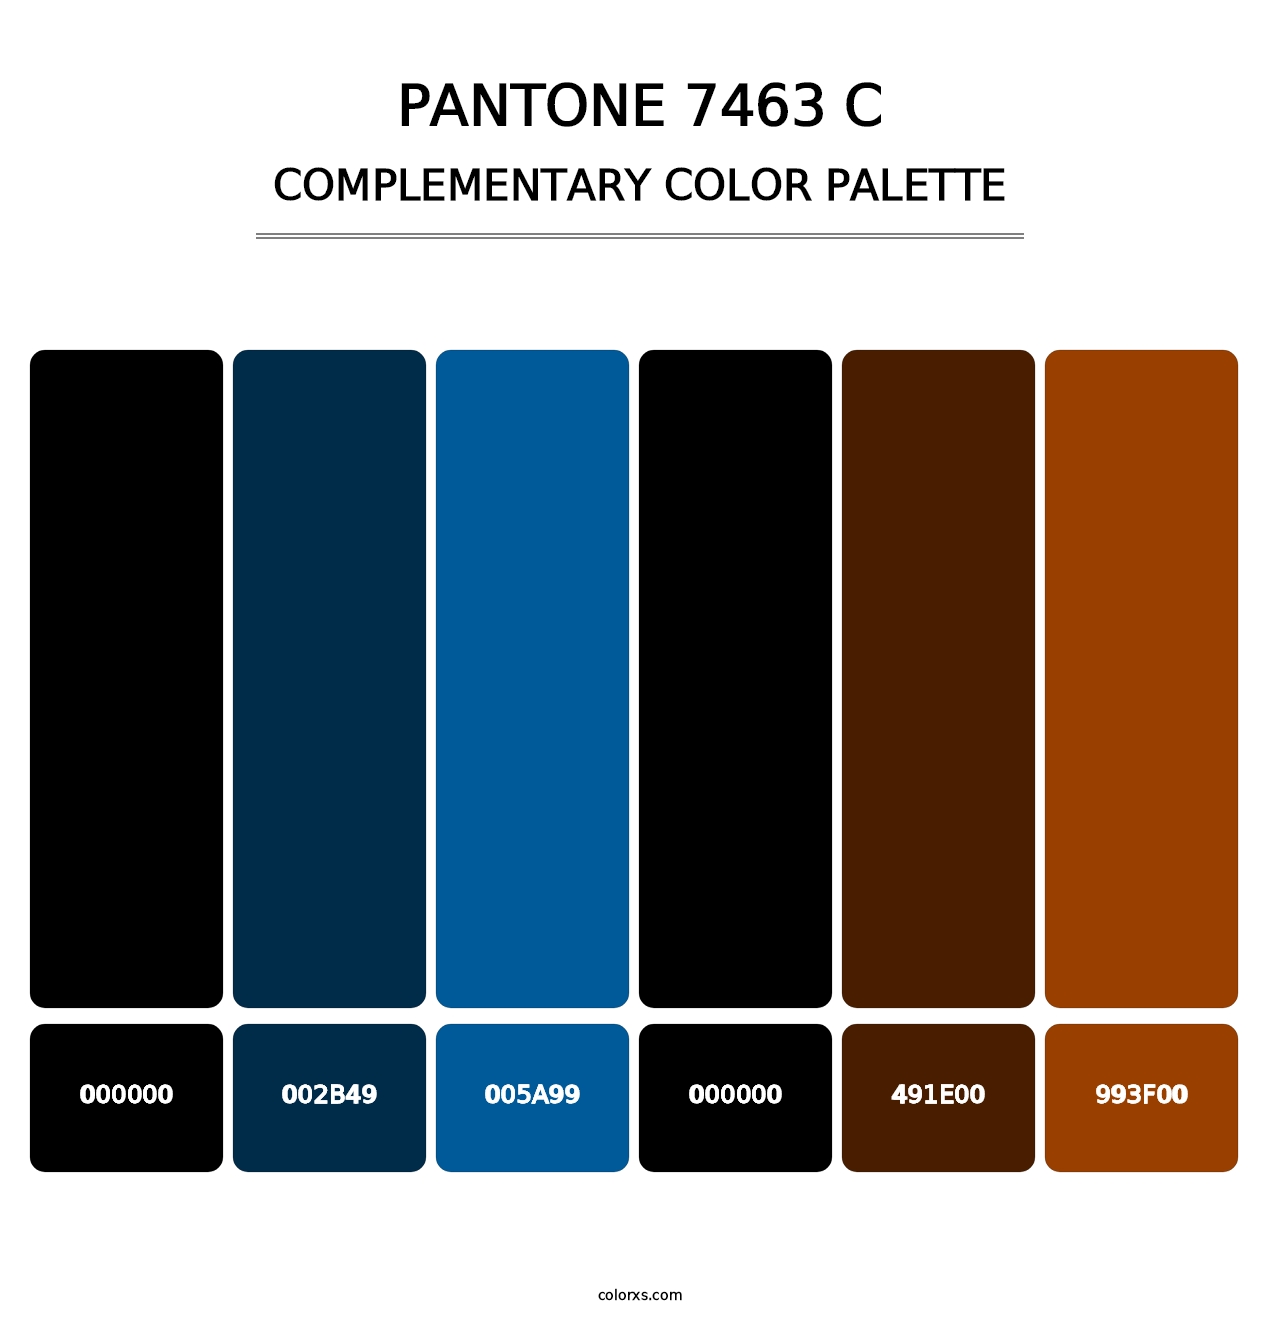 PANTONE 7463 C - Complementary Color Palette